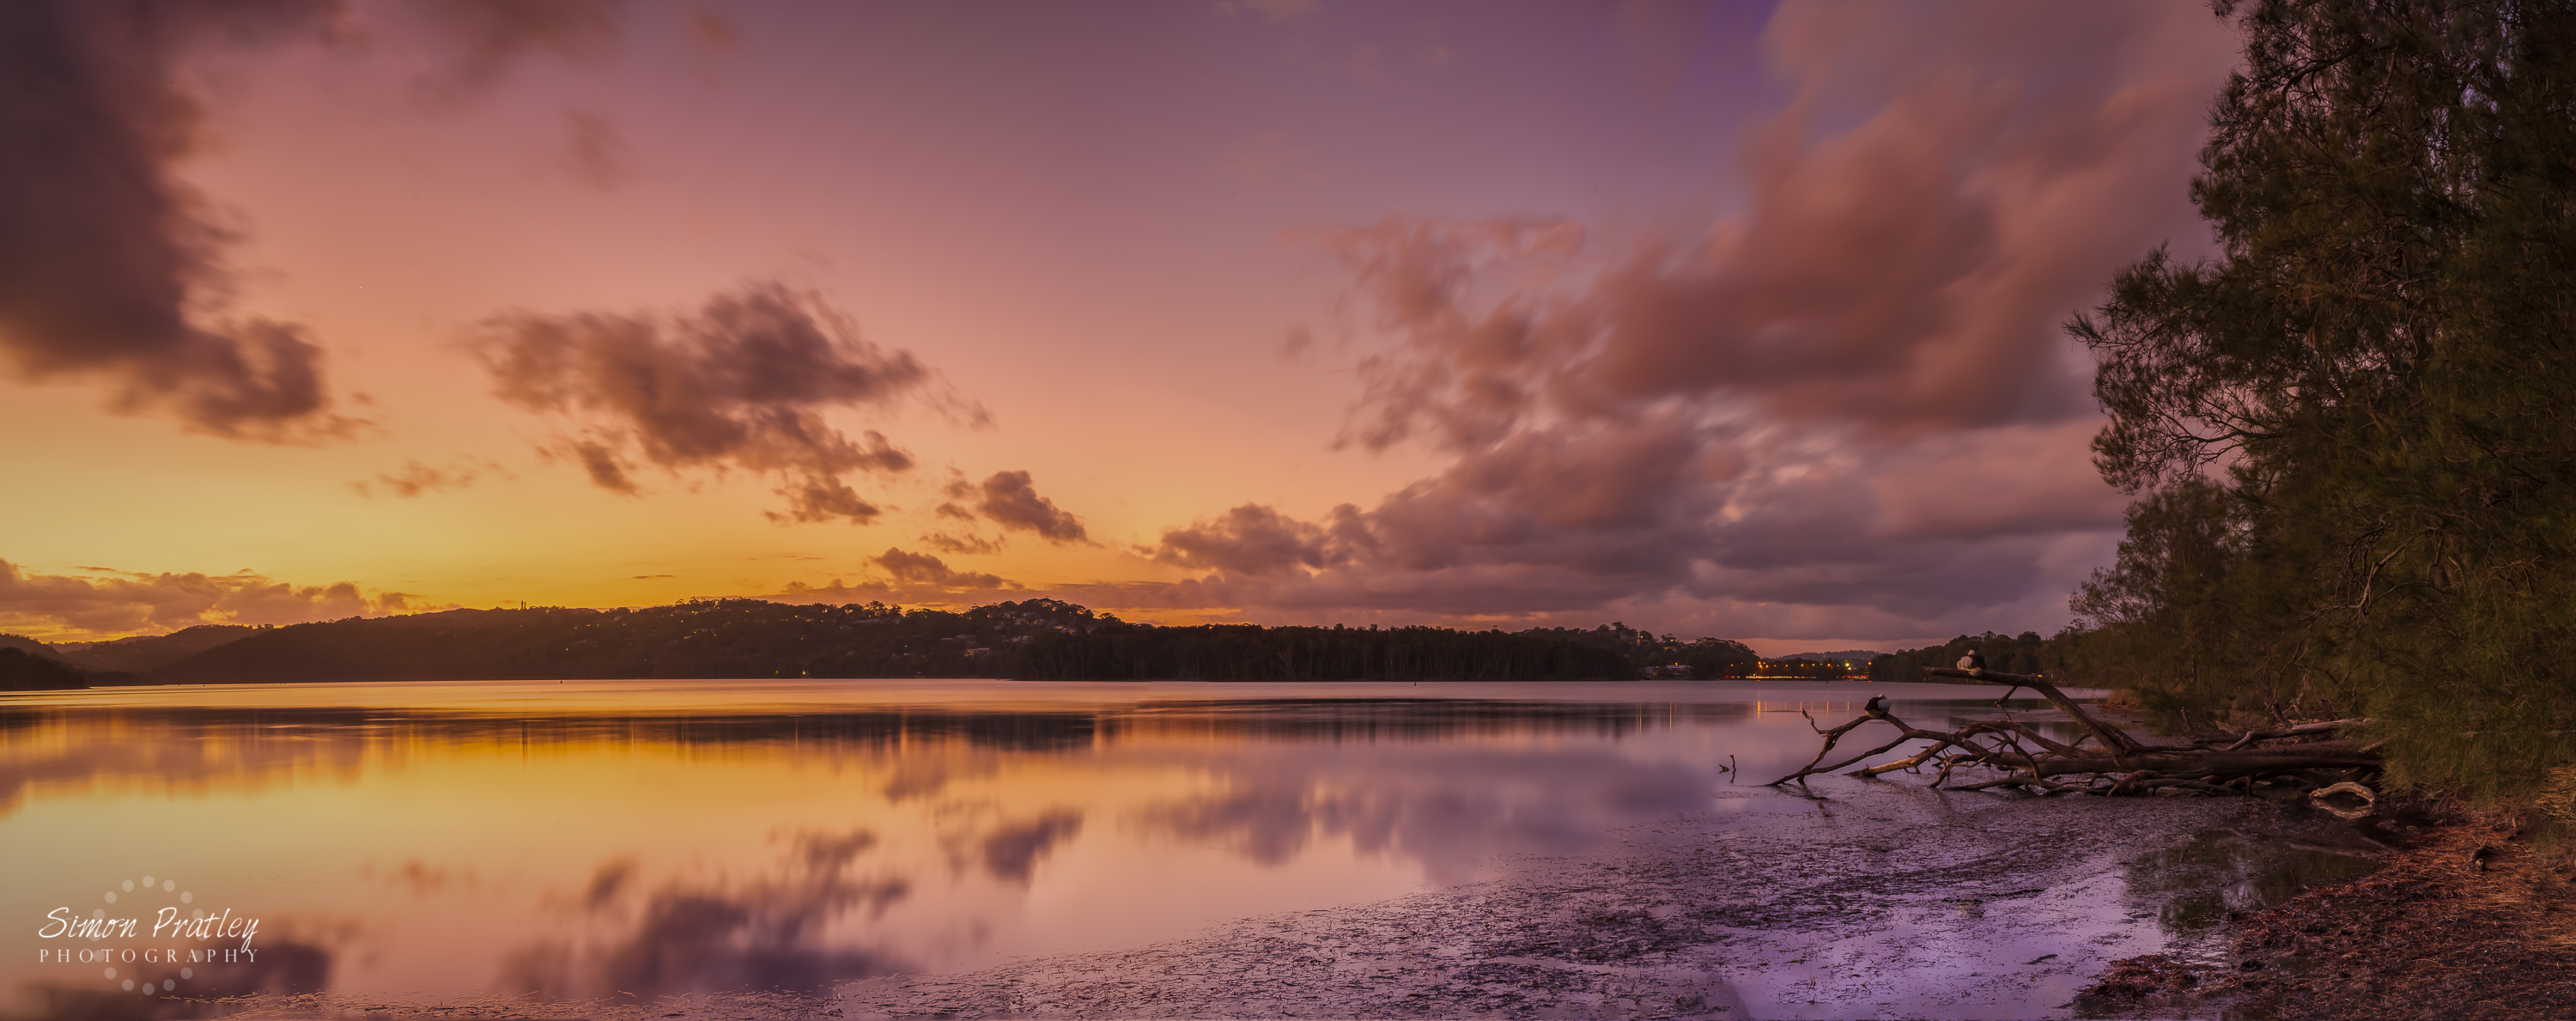 Narrabeen Lagoon at Sunset